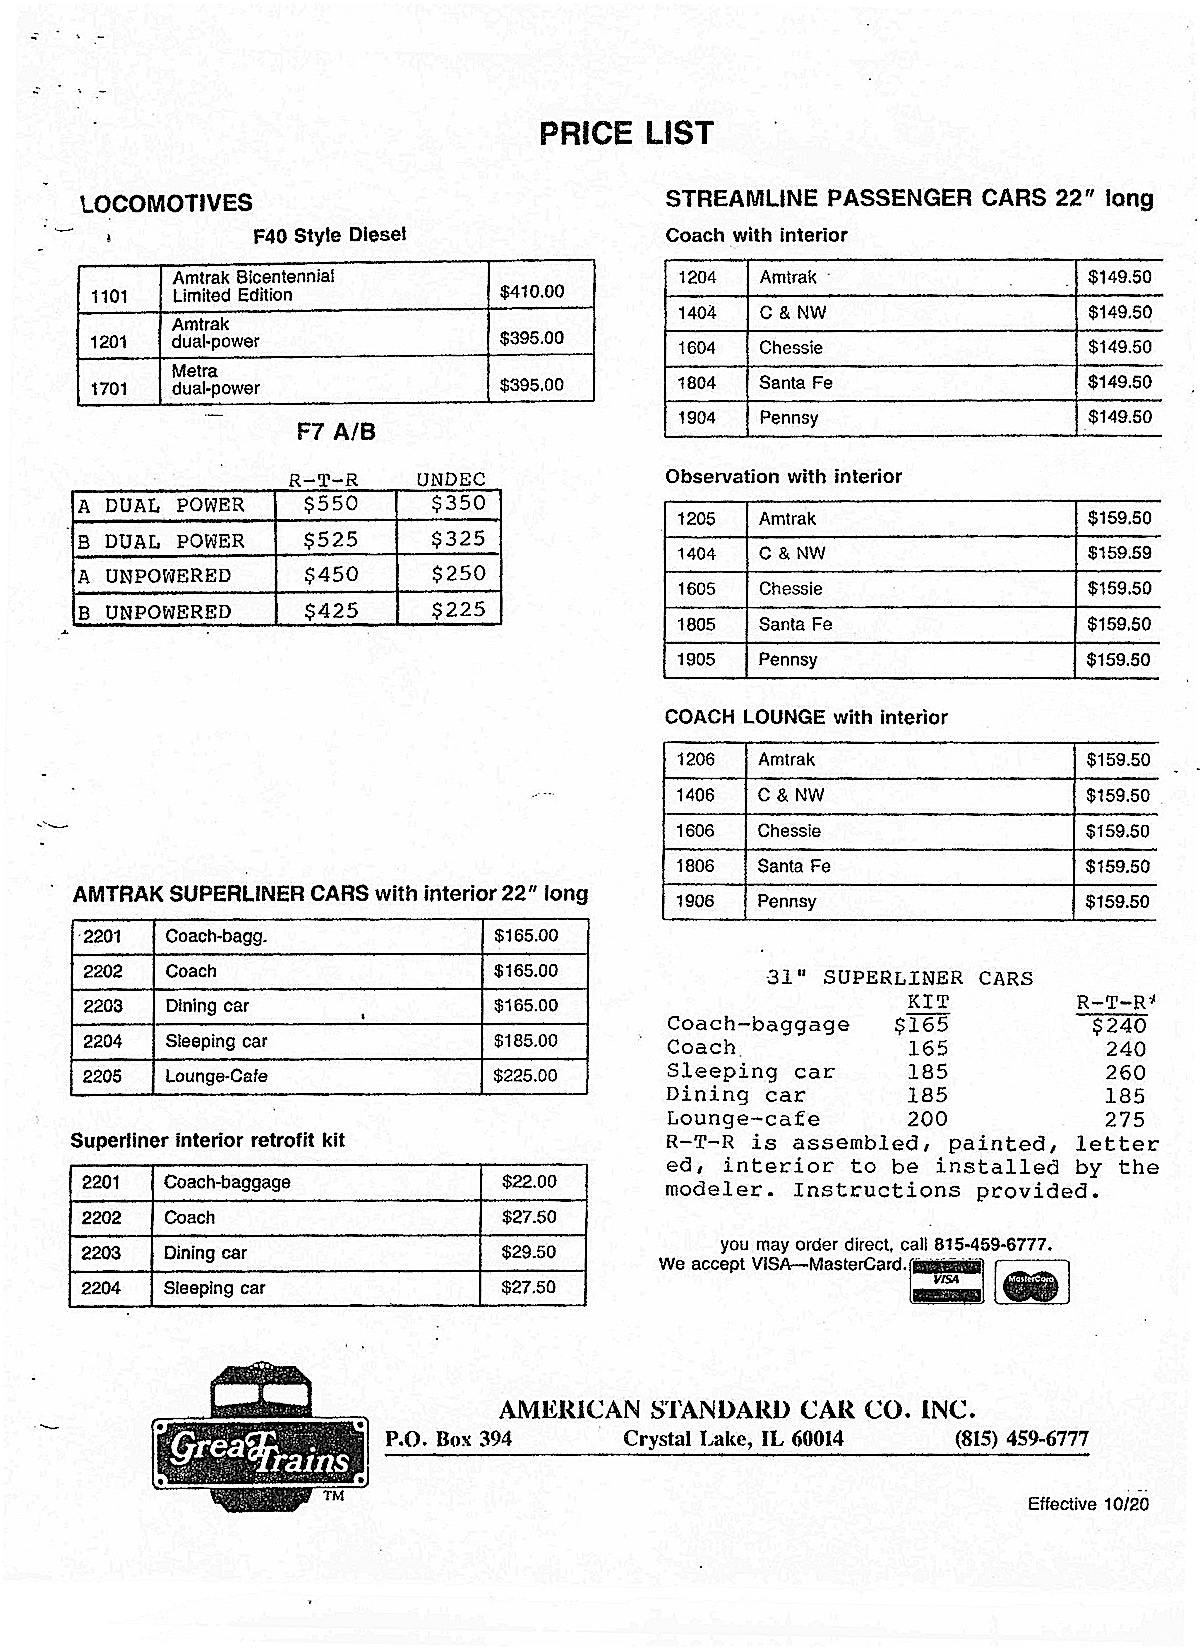 Great Trains - American Standard Car Company Inc. Preisliste (Price List)